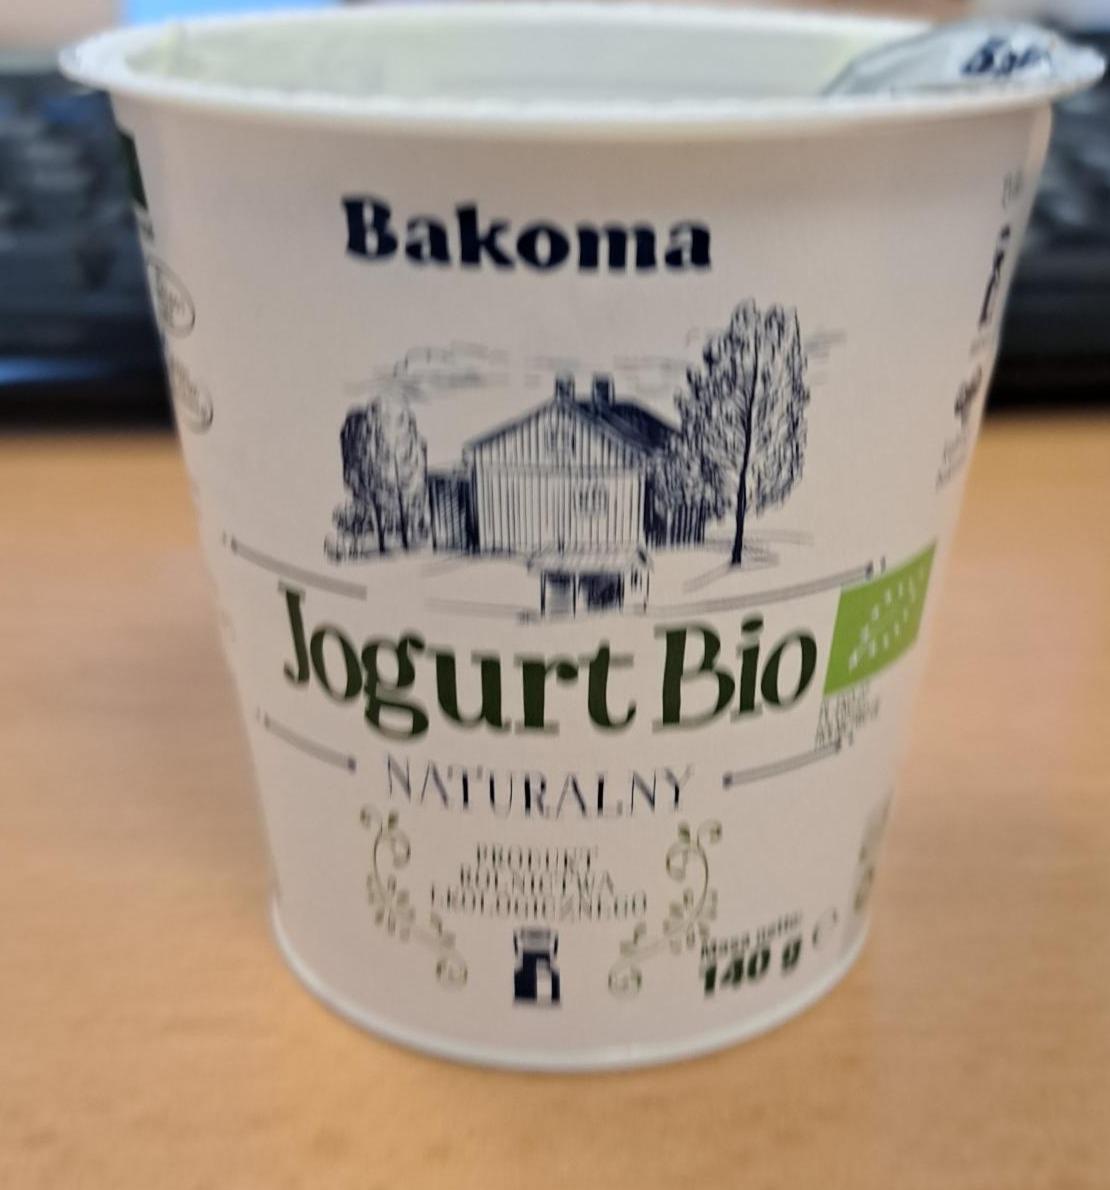 Zdjęcia - Jogurt BIO naturalny Bakoma